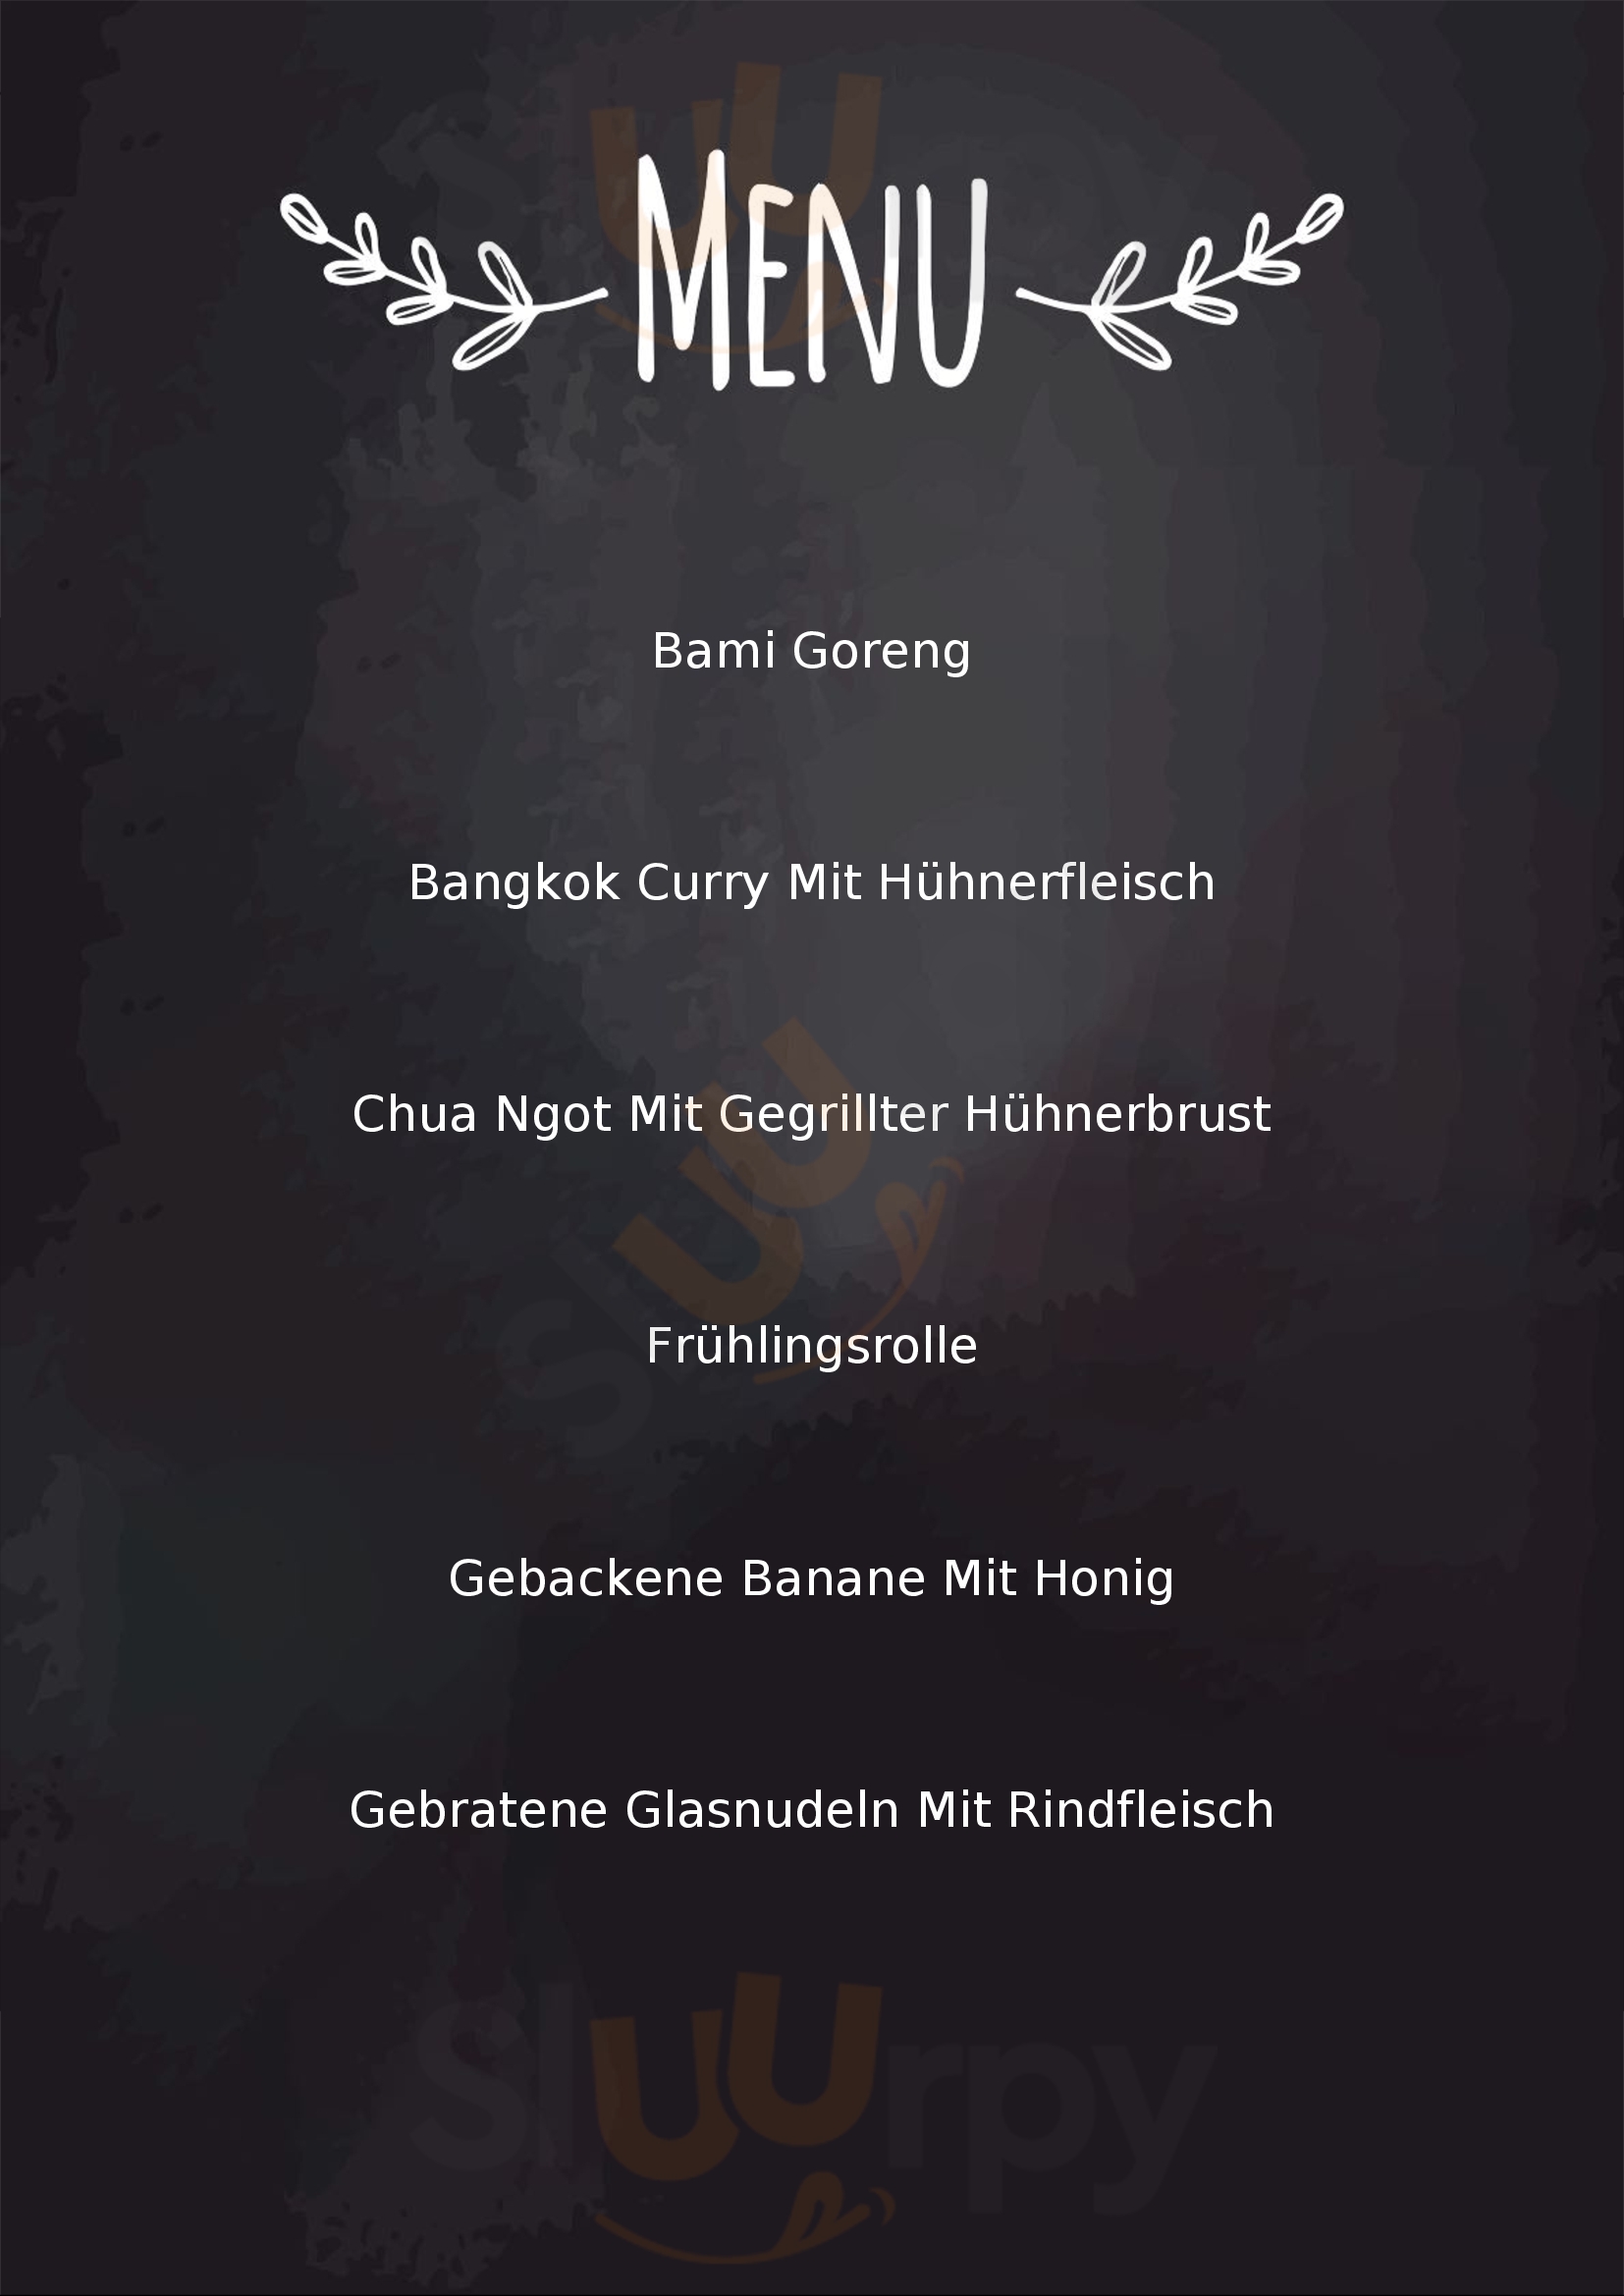 Sushi Restaurant Viet Kuche Gifhorn Menu - 1